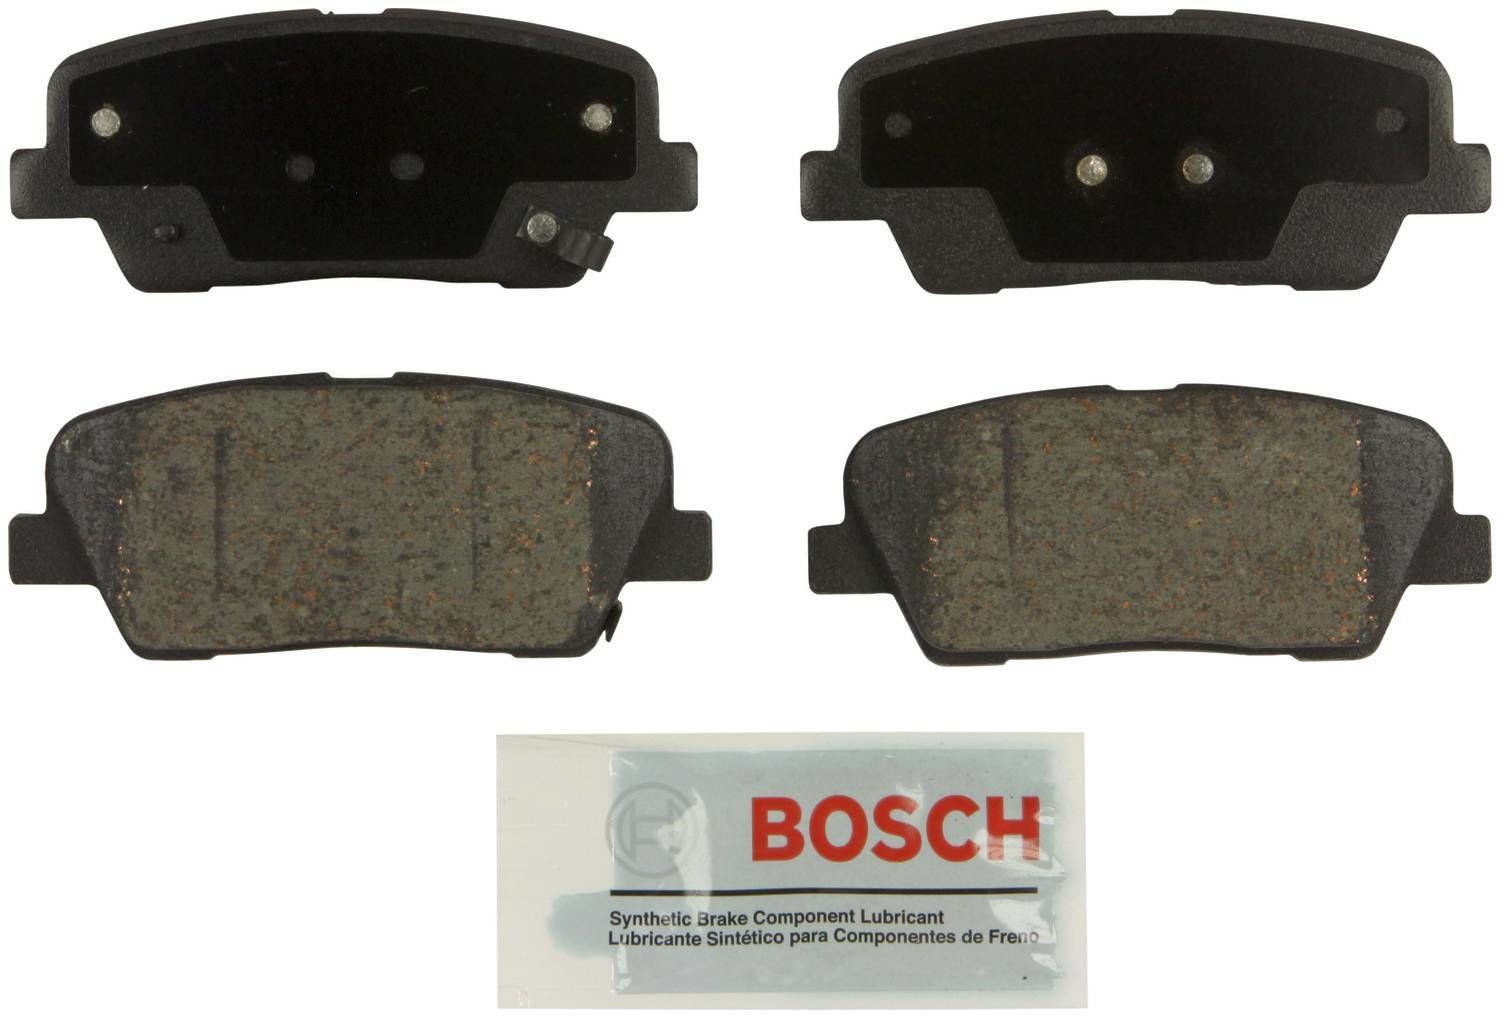 BOSCH BRAKE - Bosch Blue Ceramic Brake Pads (Rear) - BQC BE1284